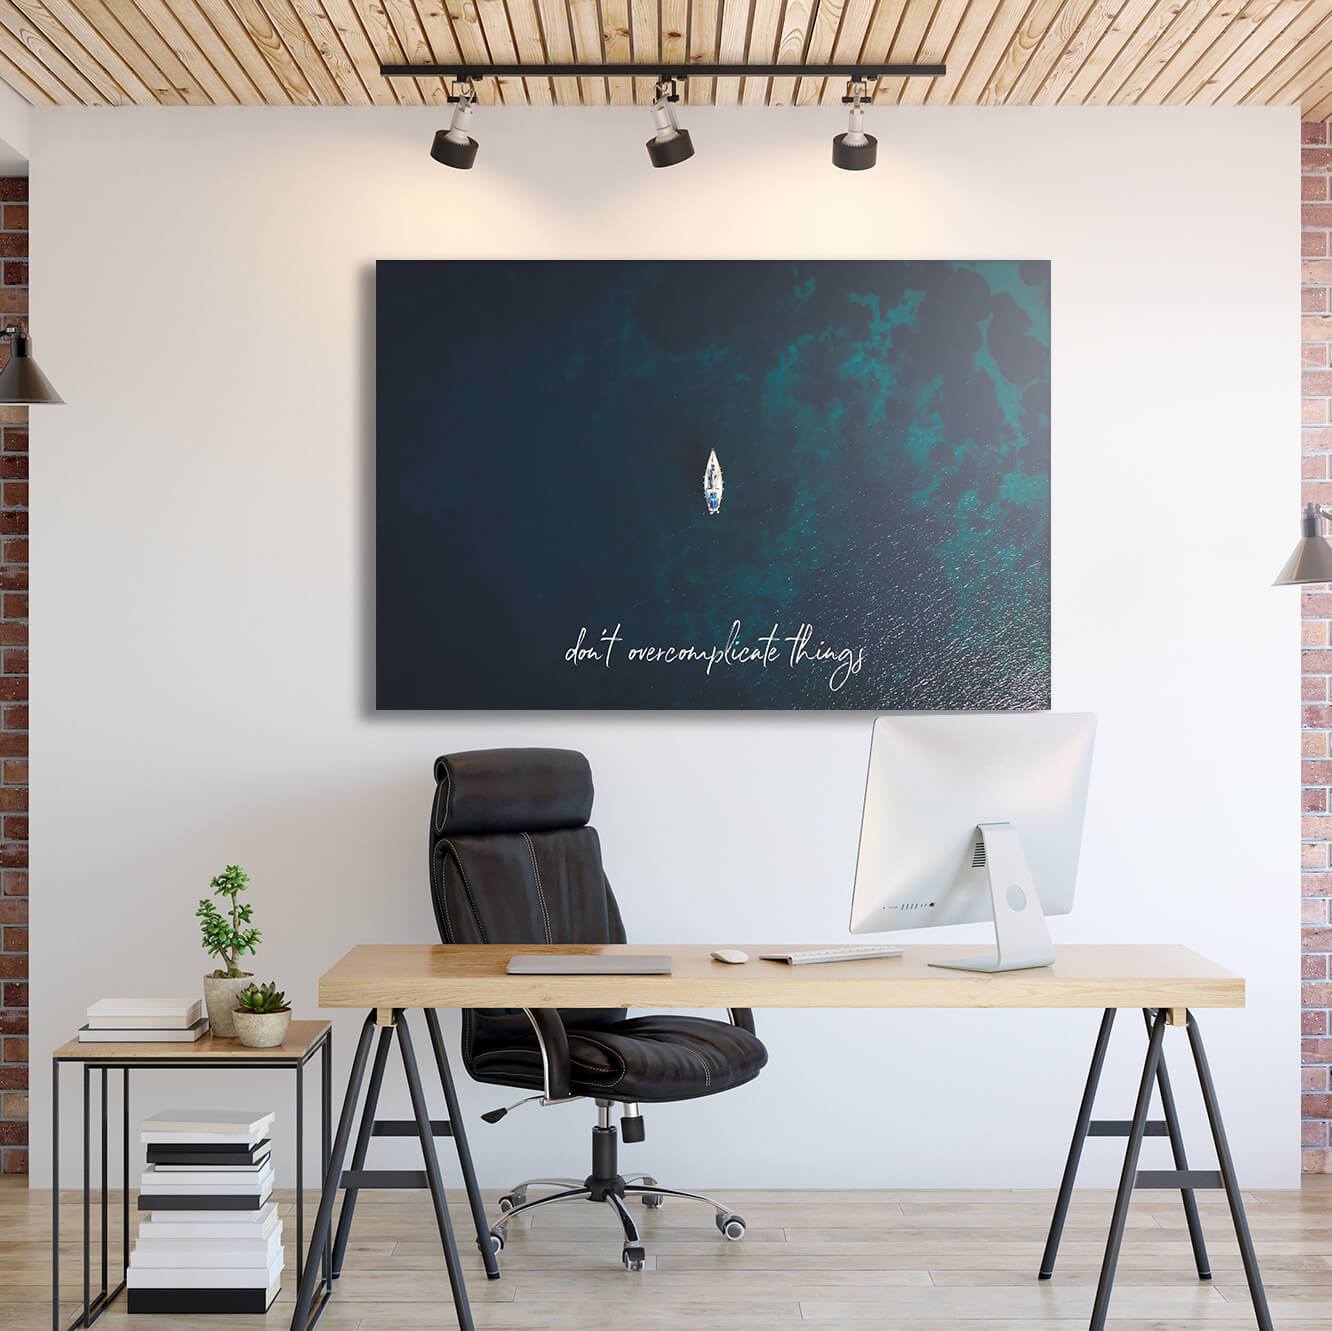 Don't Overcomplicate Things - Boat Wall Art | Inspirational Wall Art Motivational Wall Art Quotes Office Art | ImpaktMaker Exclusive Canvas Art Landscape